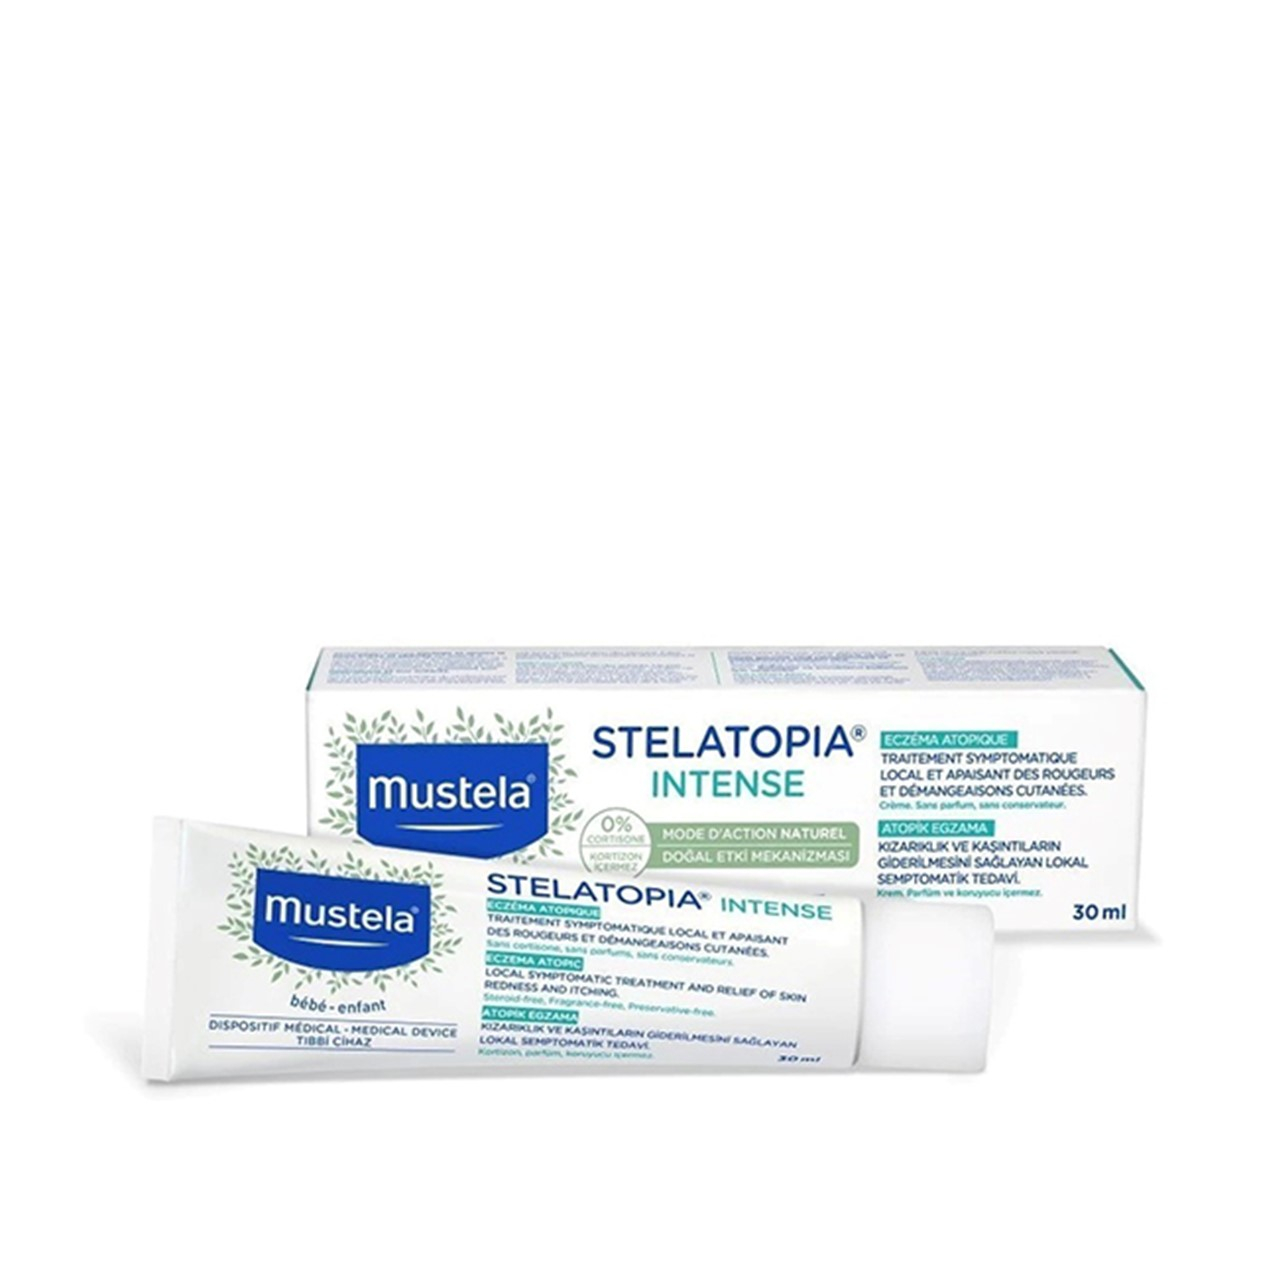 Mustela Stelatopia Intense Eczema Relief